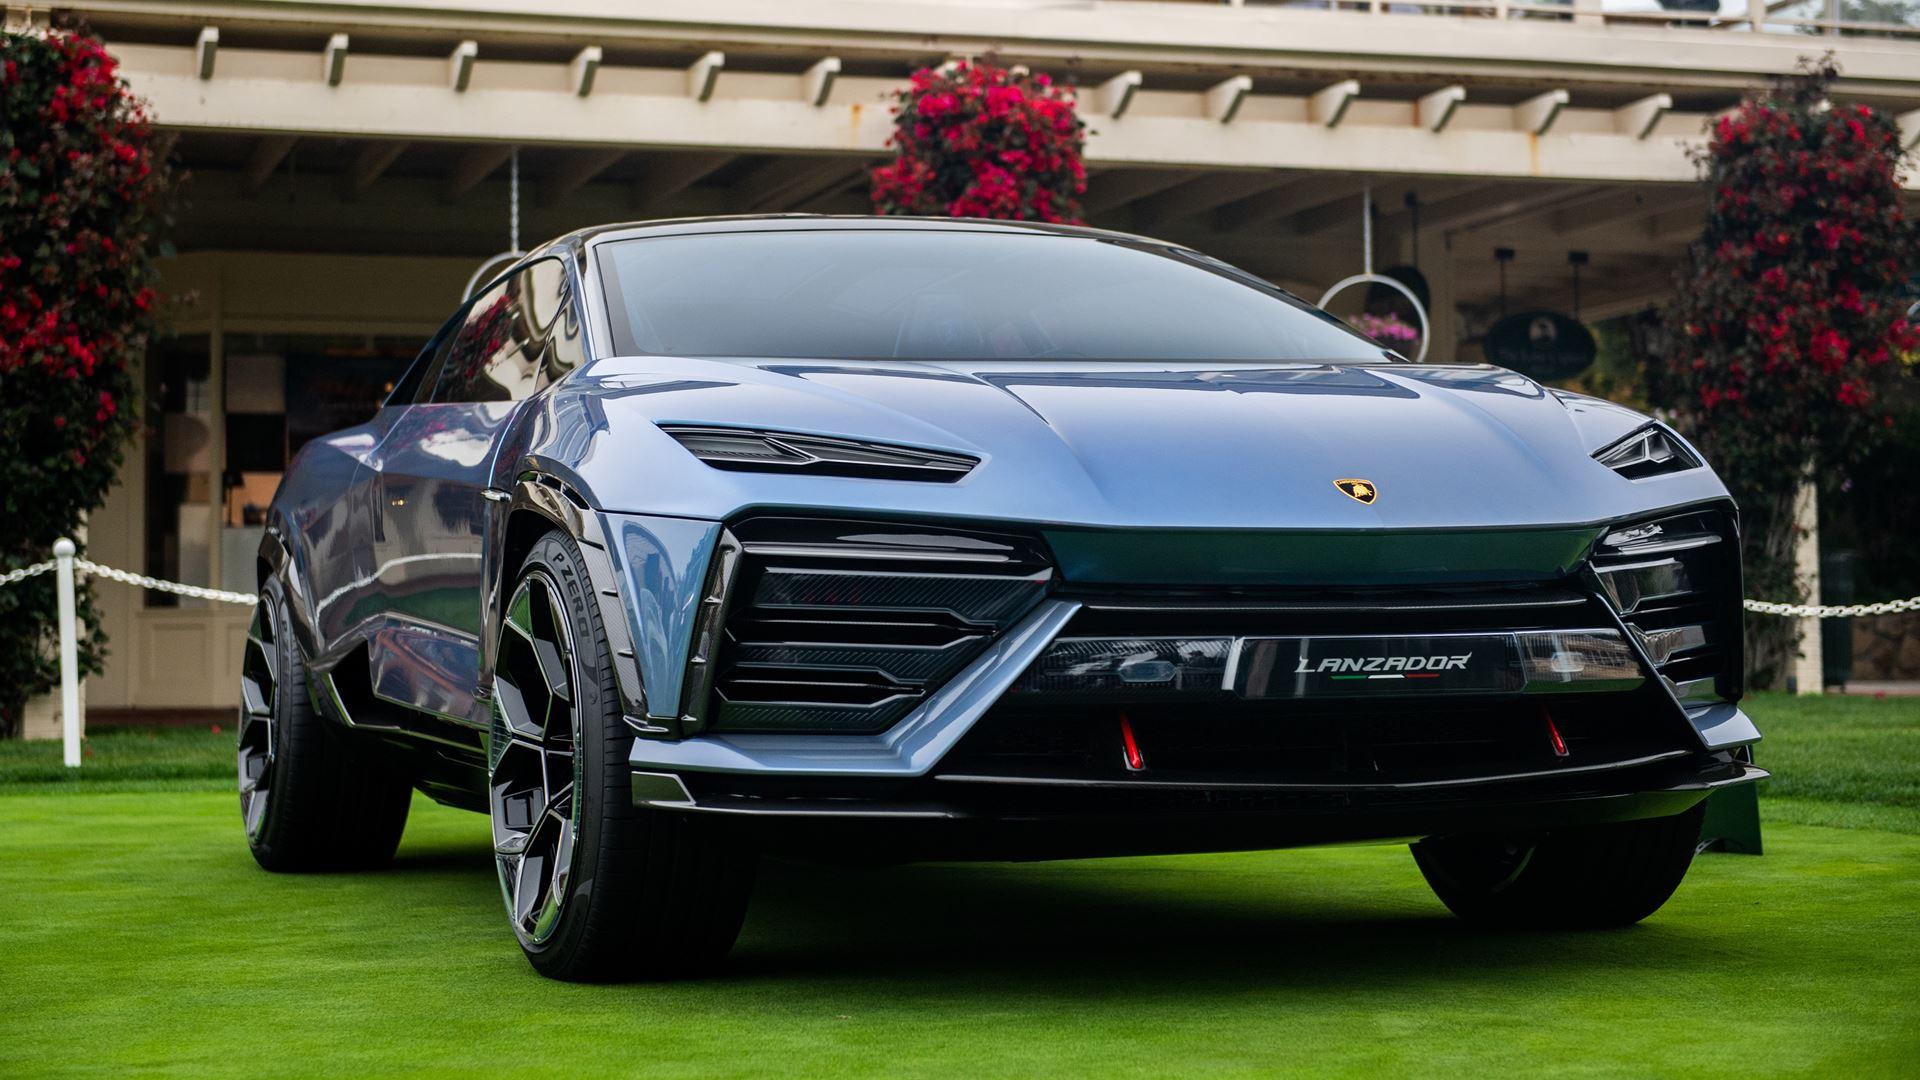 Lamborghini lanzador ev concept